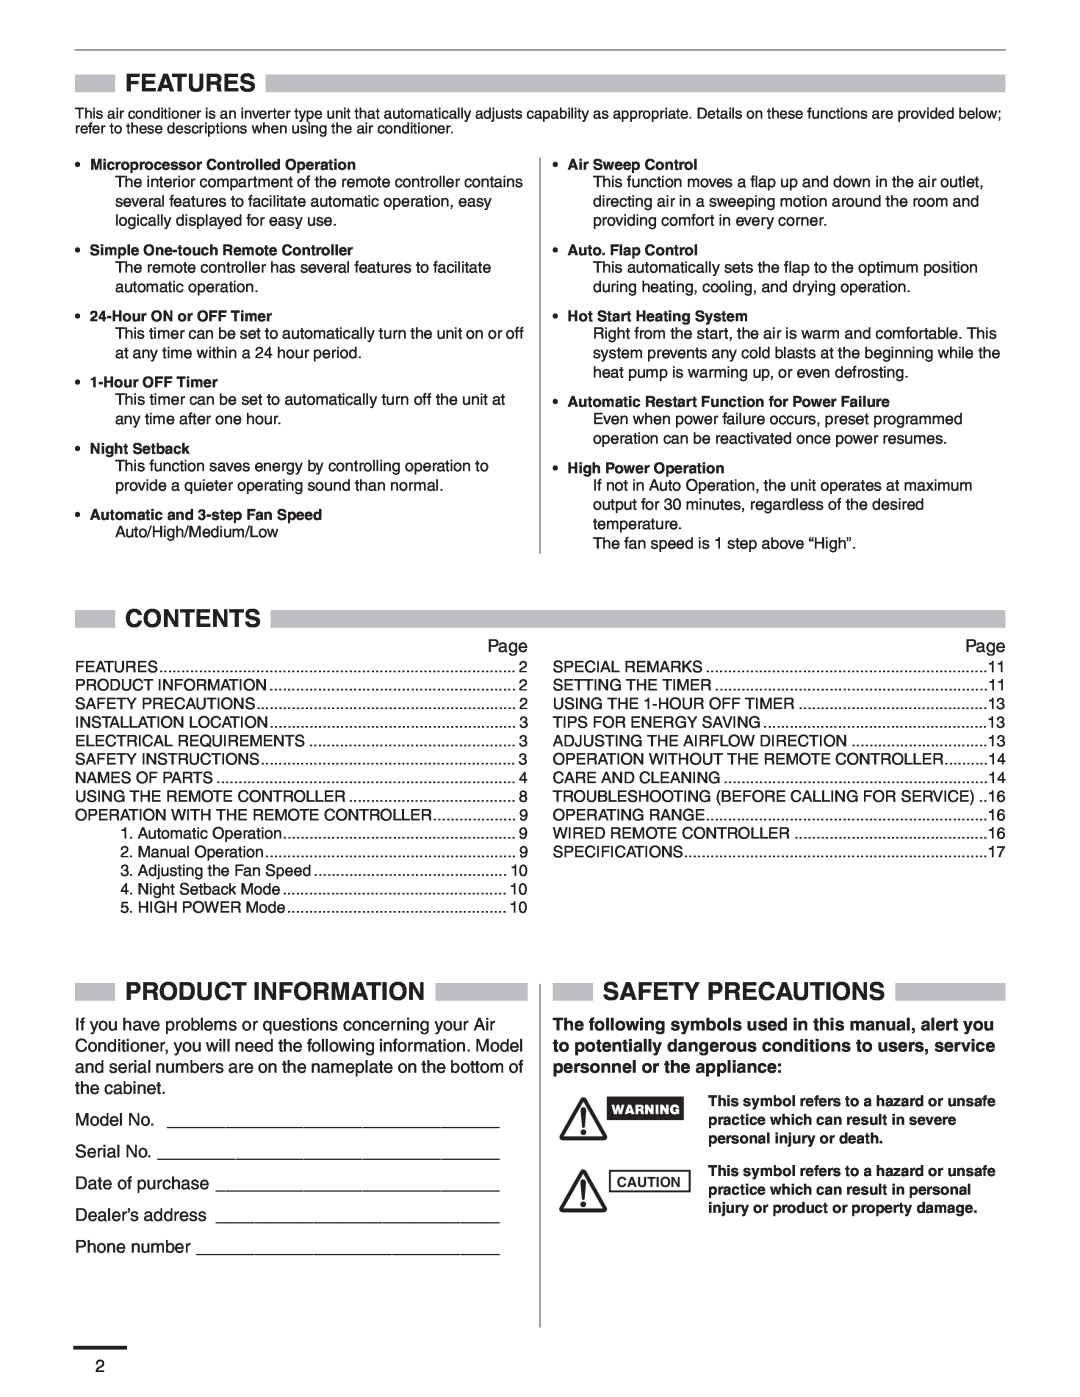 Panasonic CS-MKE9NB4U, CU-4KE31NBU, CU-4KE24NBU, CZ-18BT1U Features, Contents, Product Information, Safety Precautions, Page 